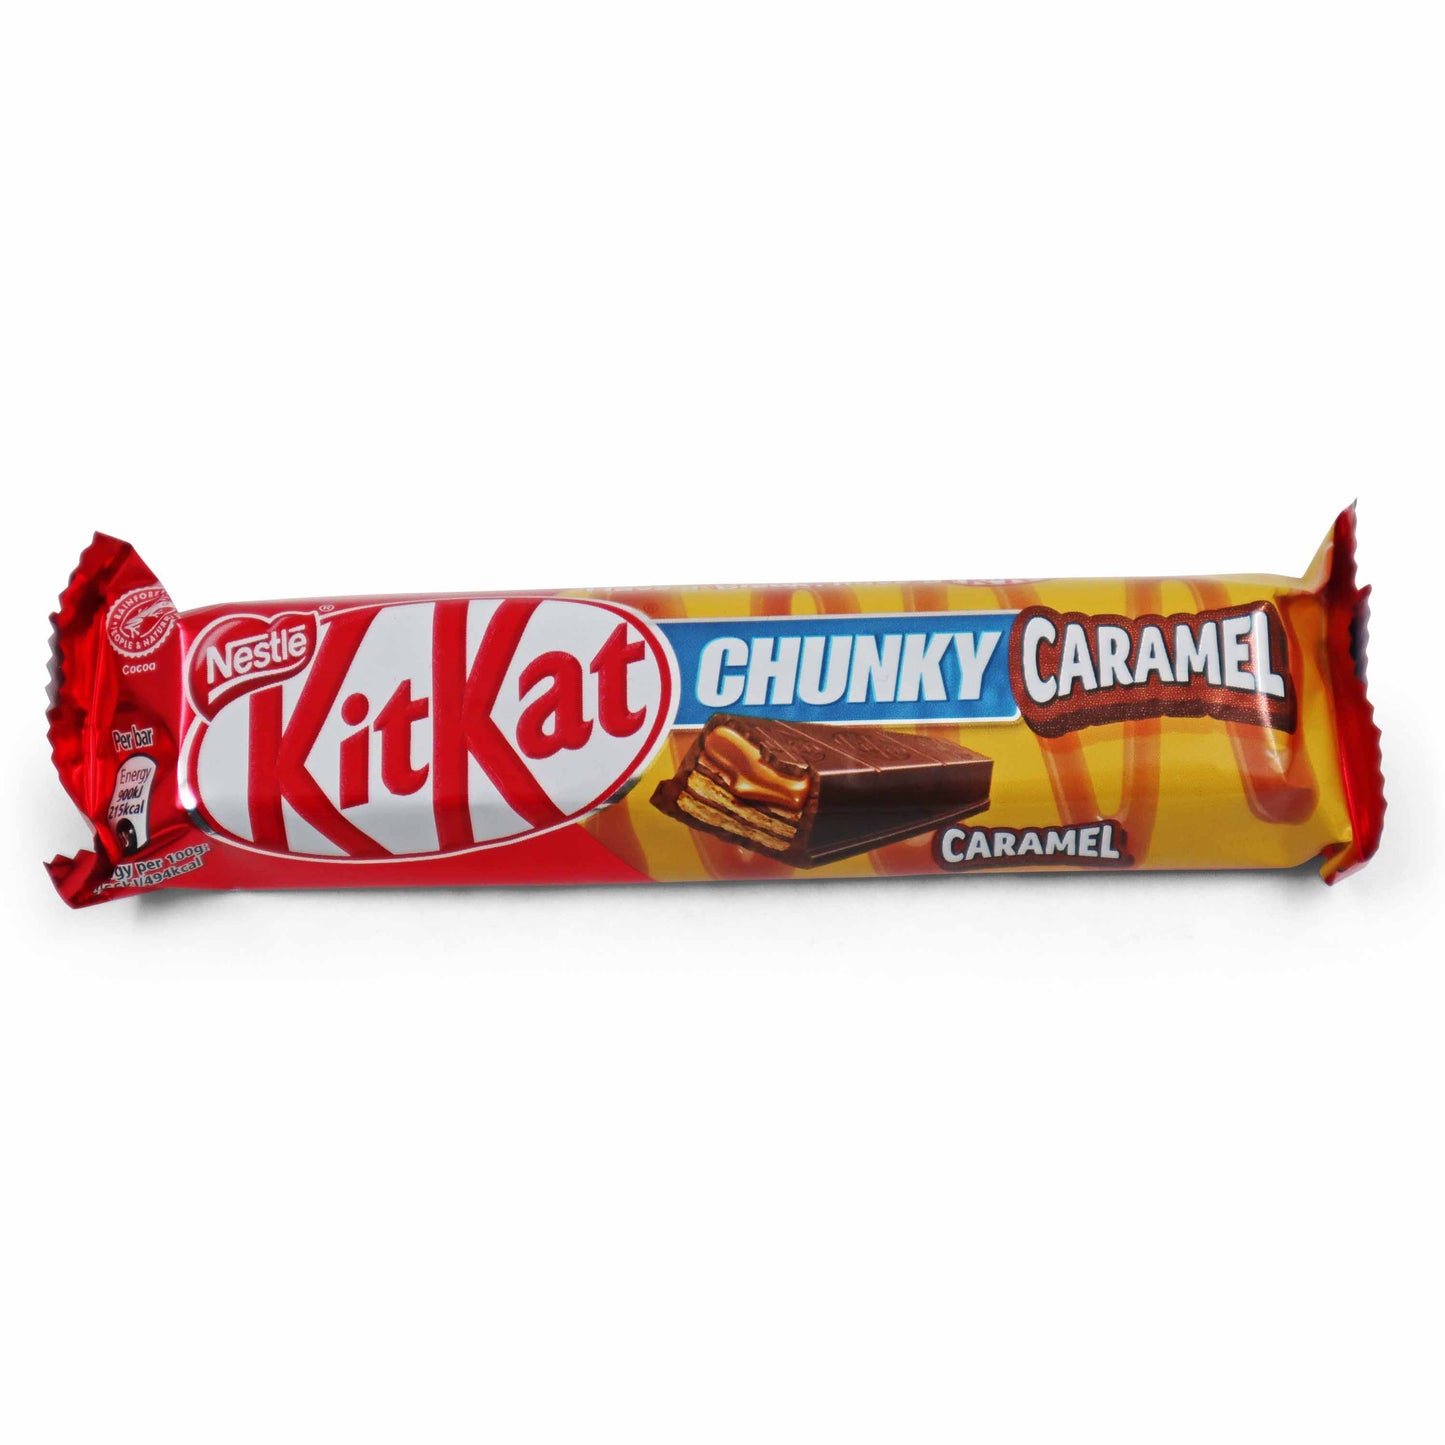 KitKat Chunky Caramel Chocolate Bar 43g - British Chocolates